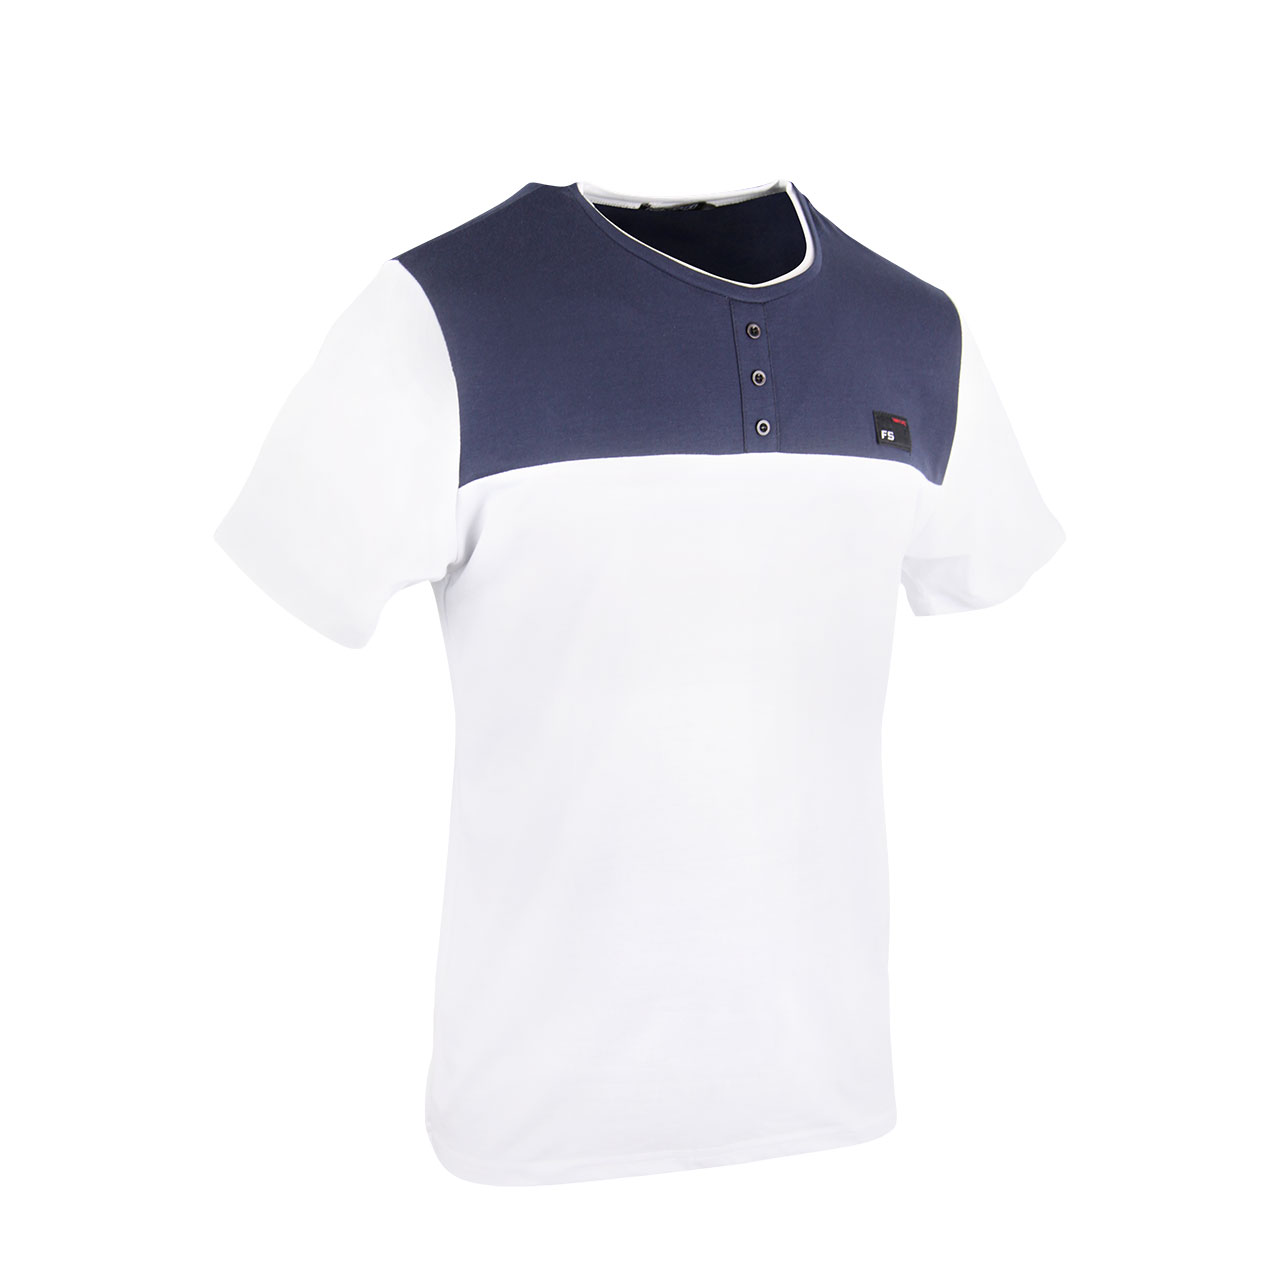 Men's Royal Blue Shirt White Collared Short Sleeve Henley T-Shirt